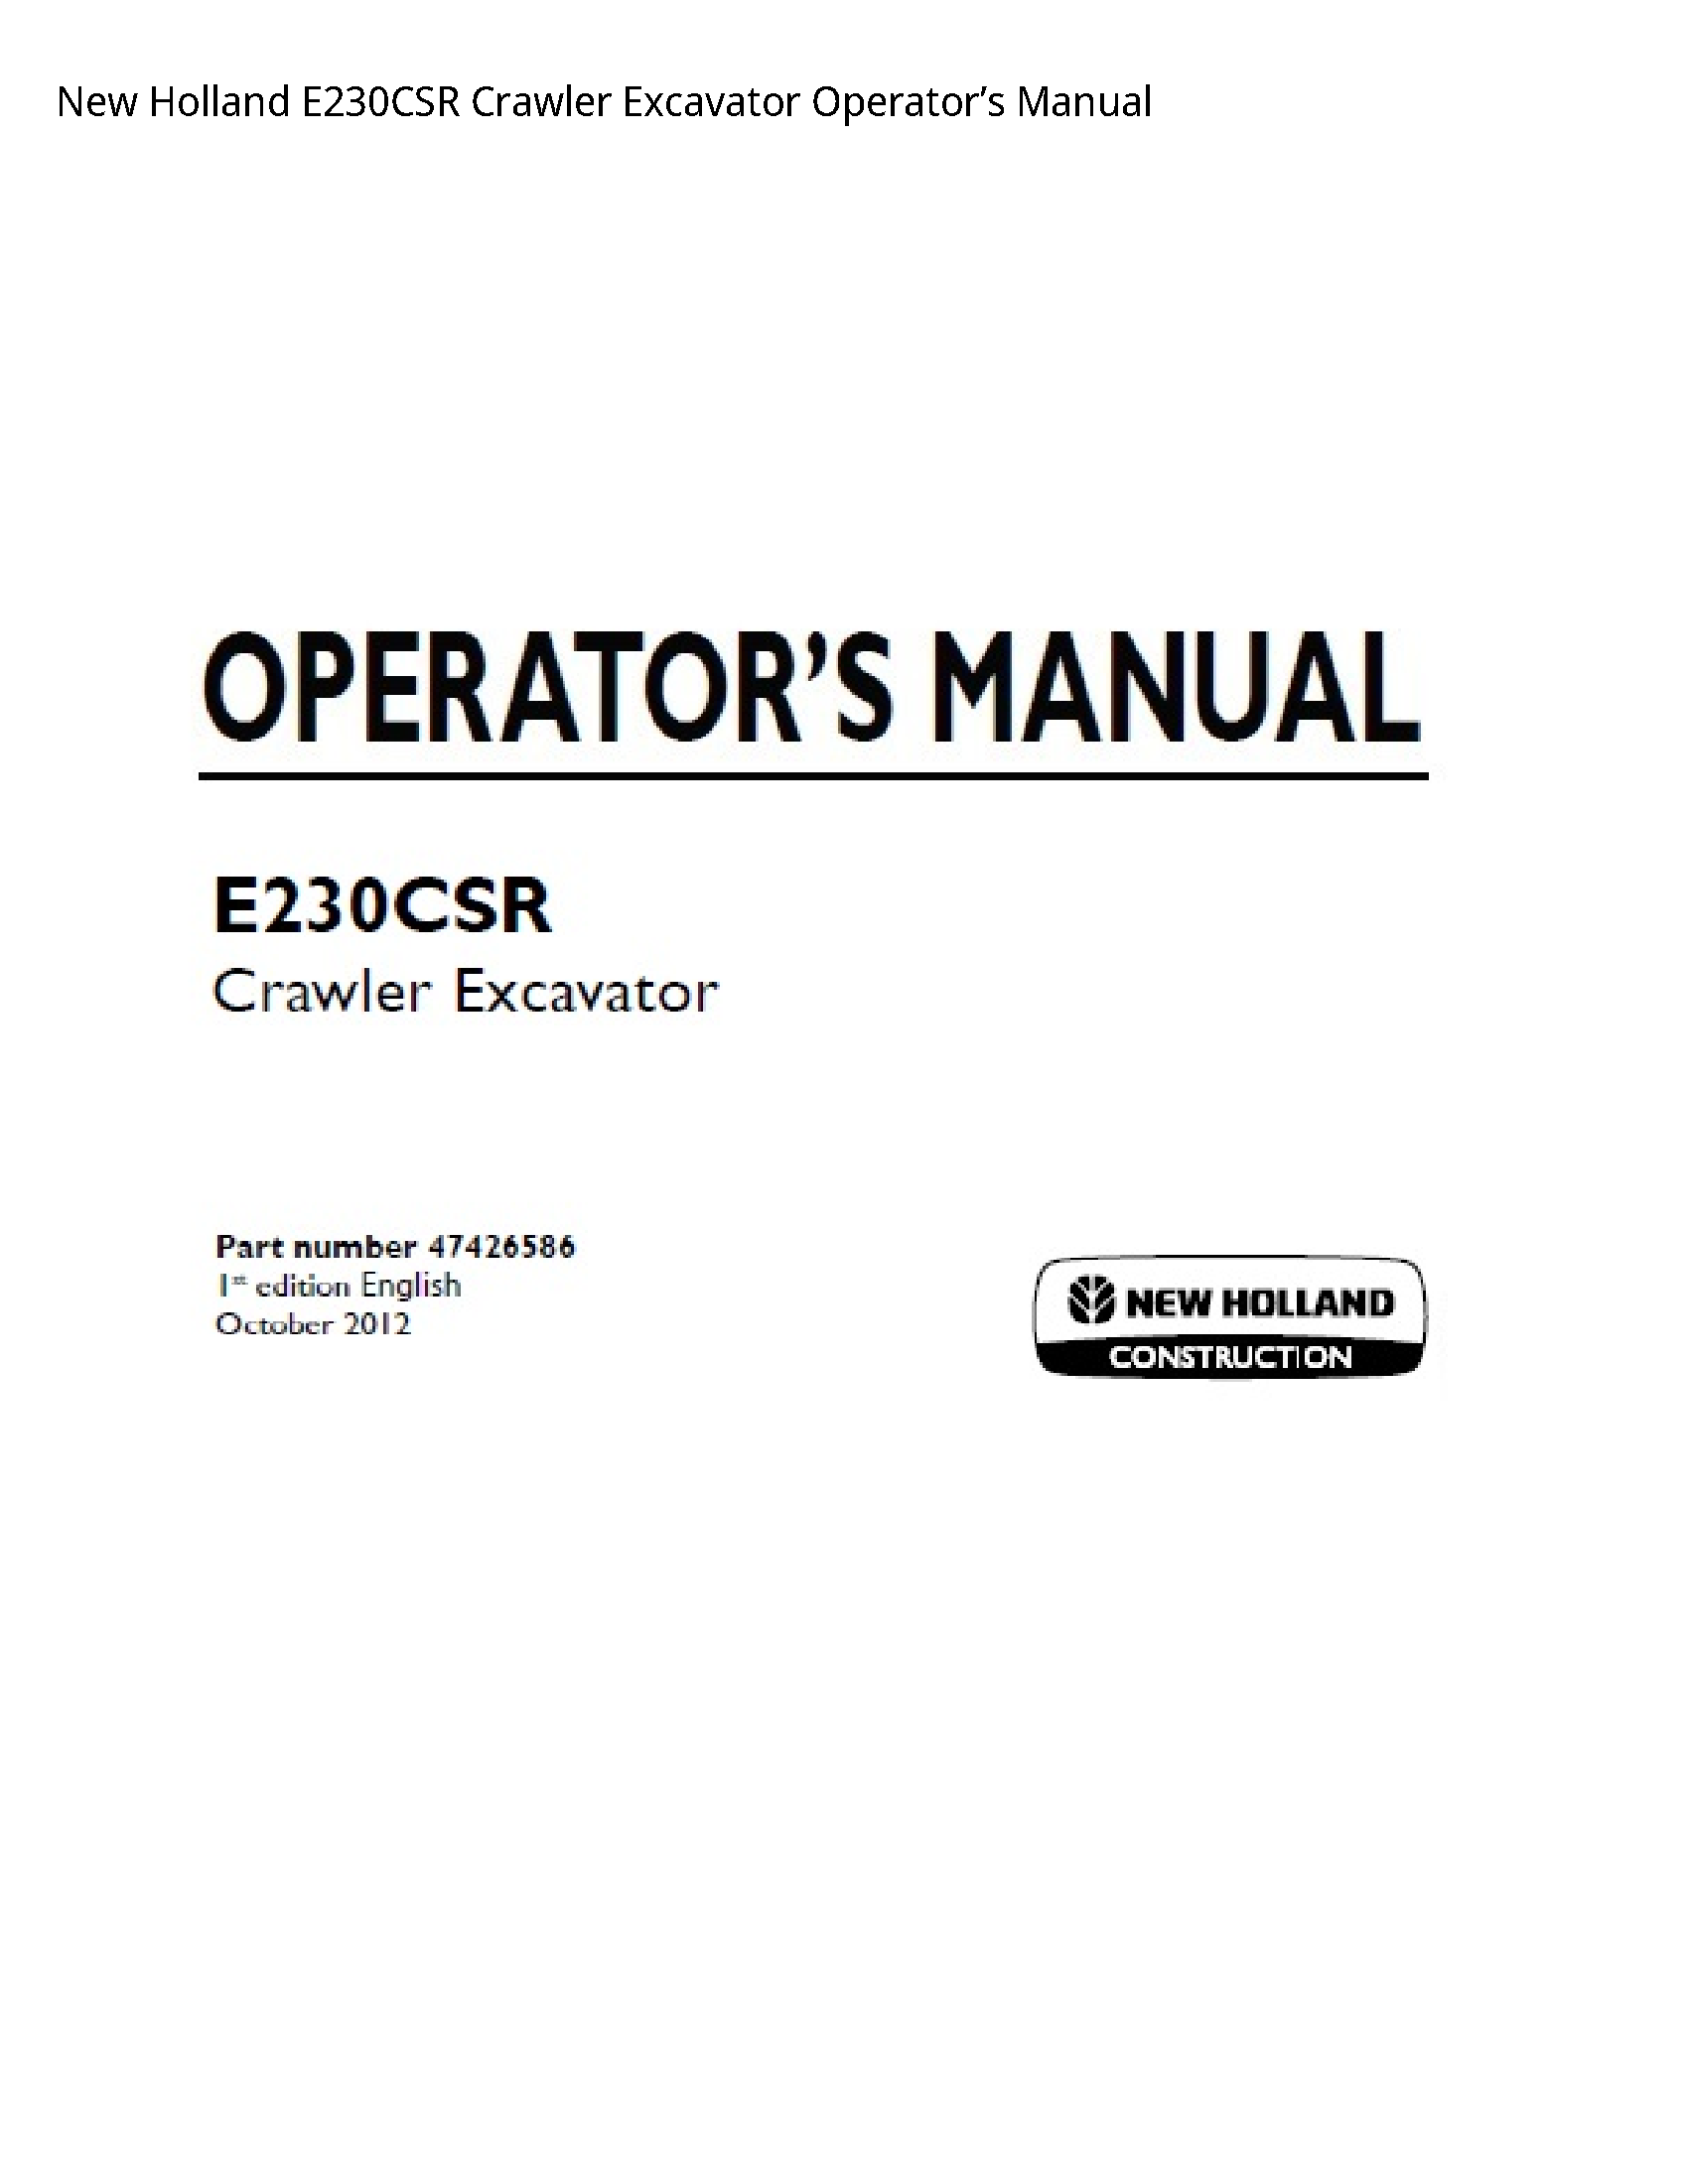 New Holland E230CSR Crawler Excavator Operator’s manual